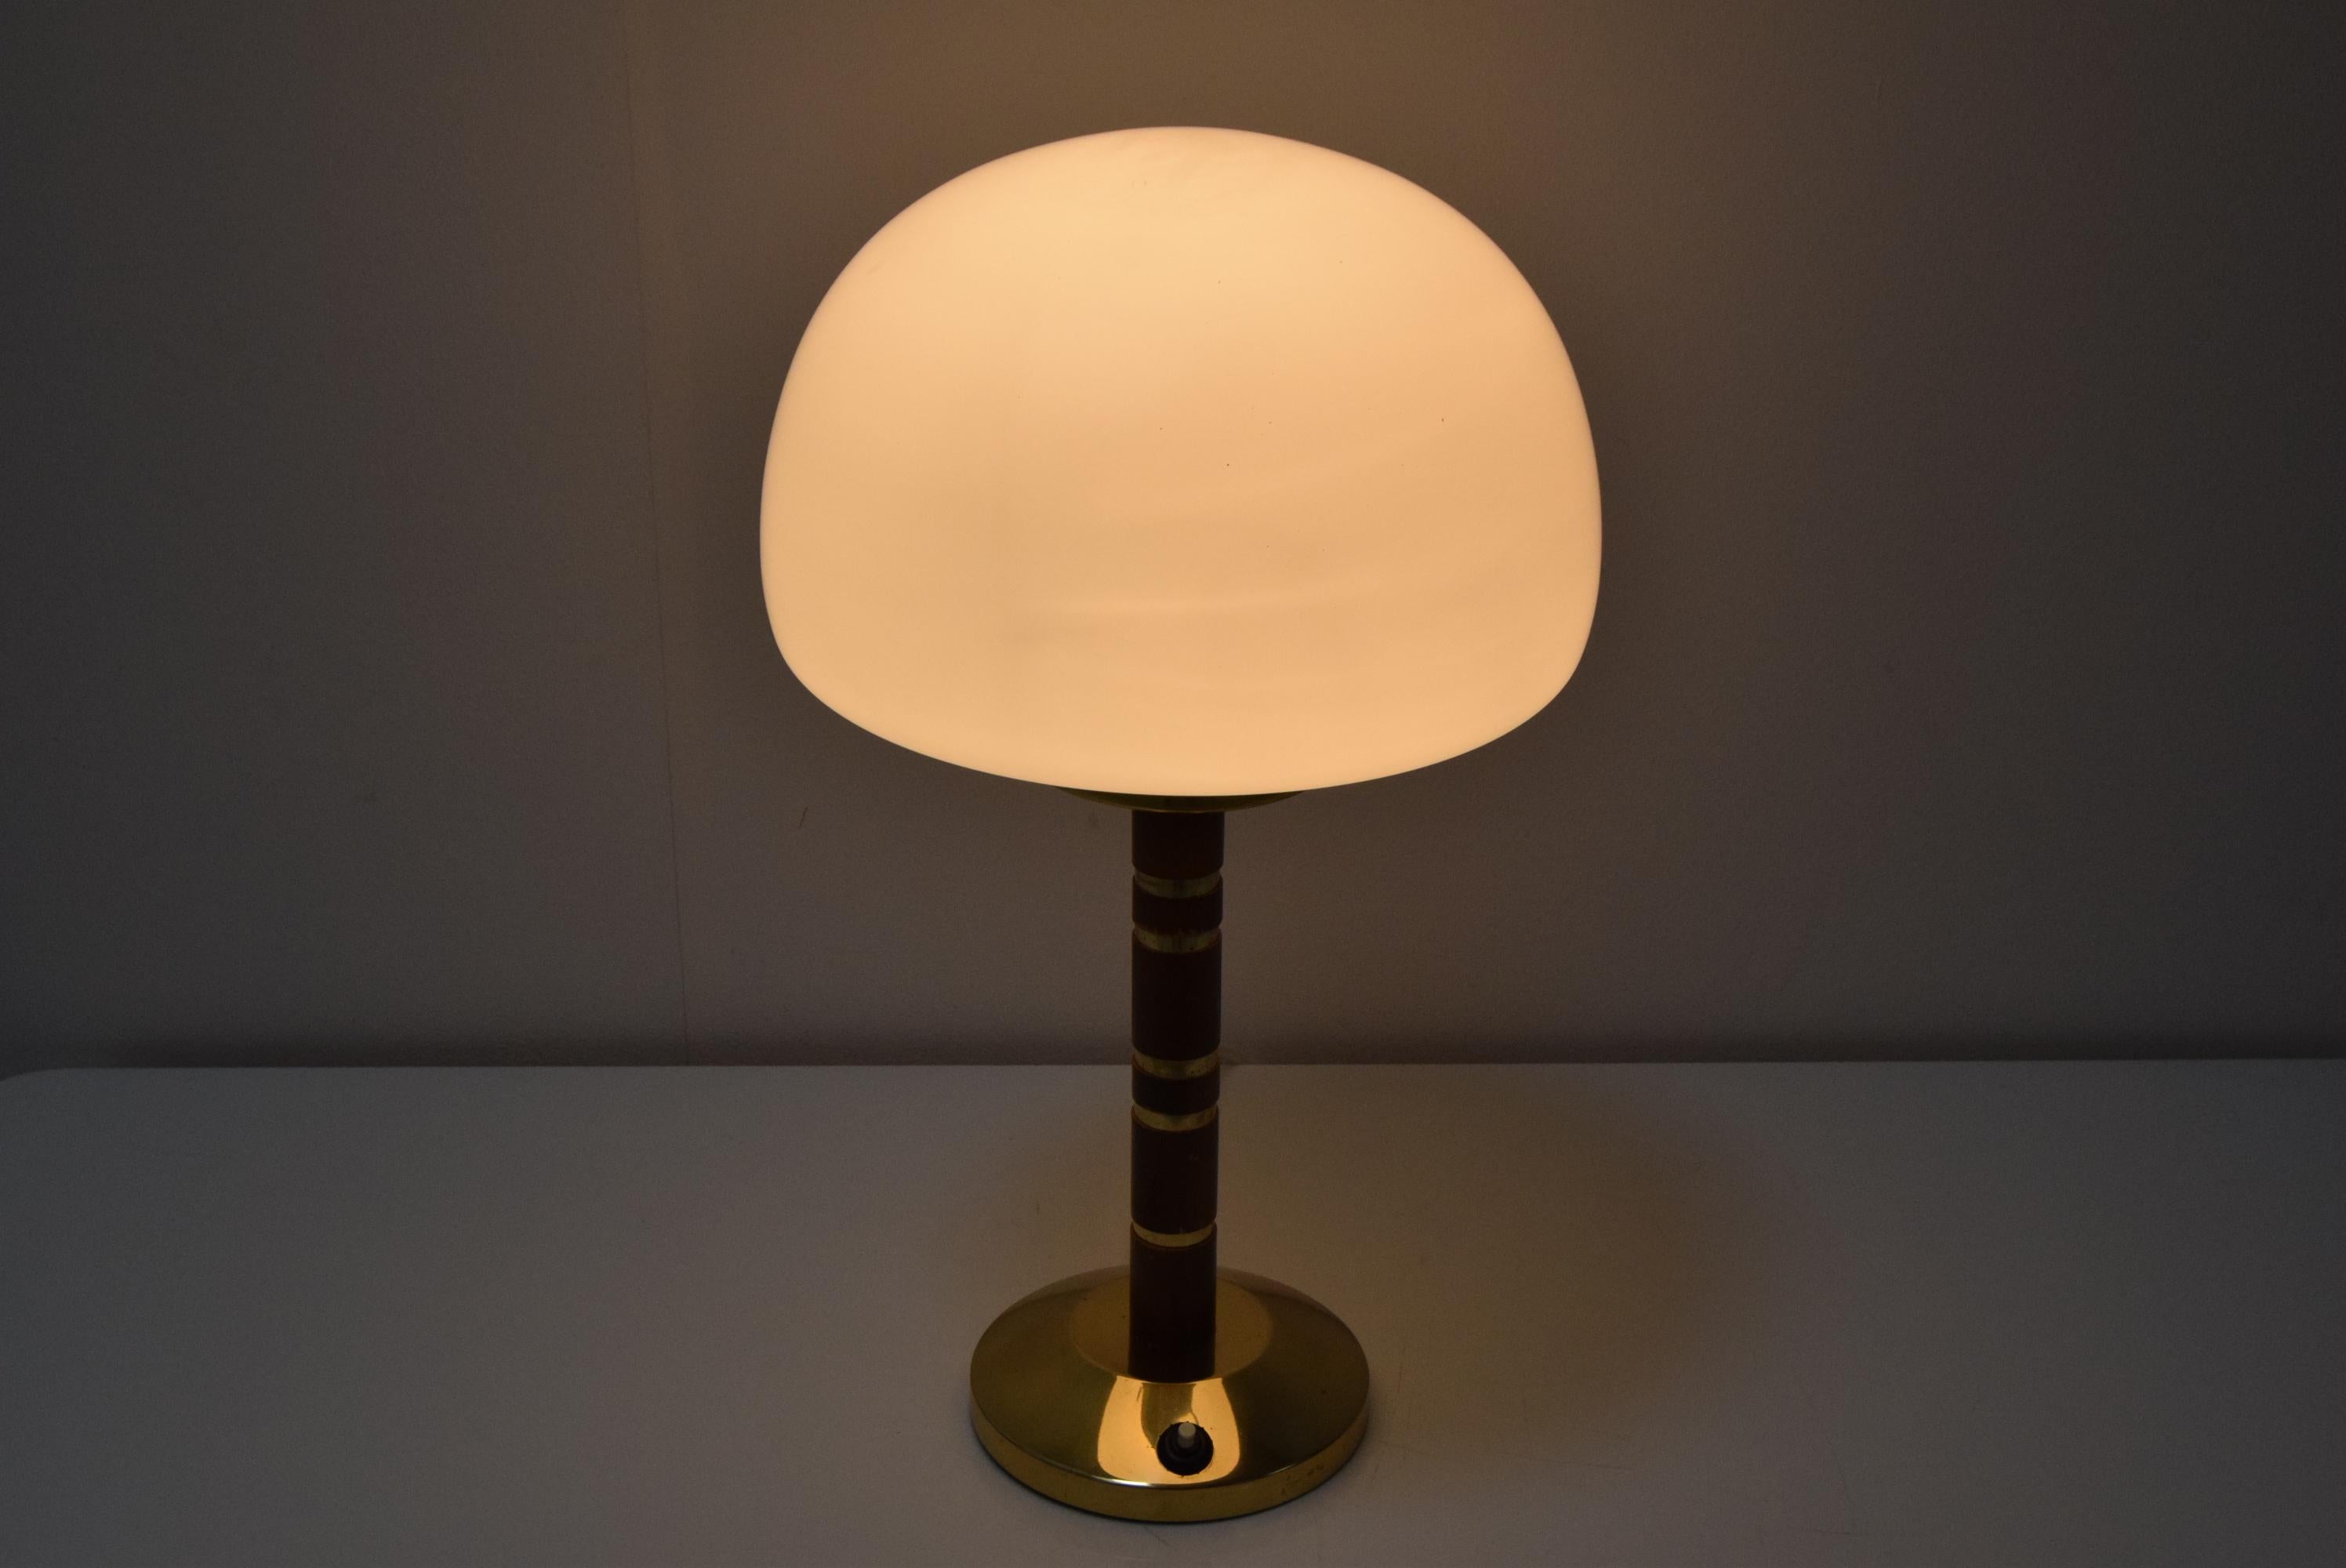 Vintage Table Lamp Designed by Jaroslav Bejvl for Lidokov, 1960's.  1